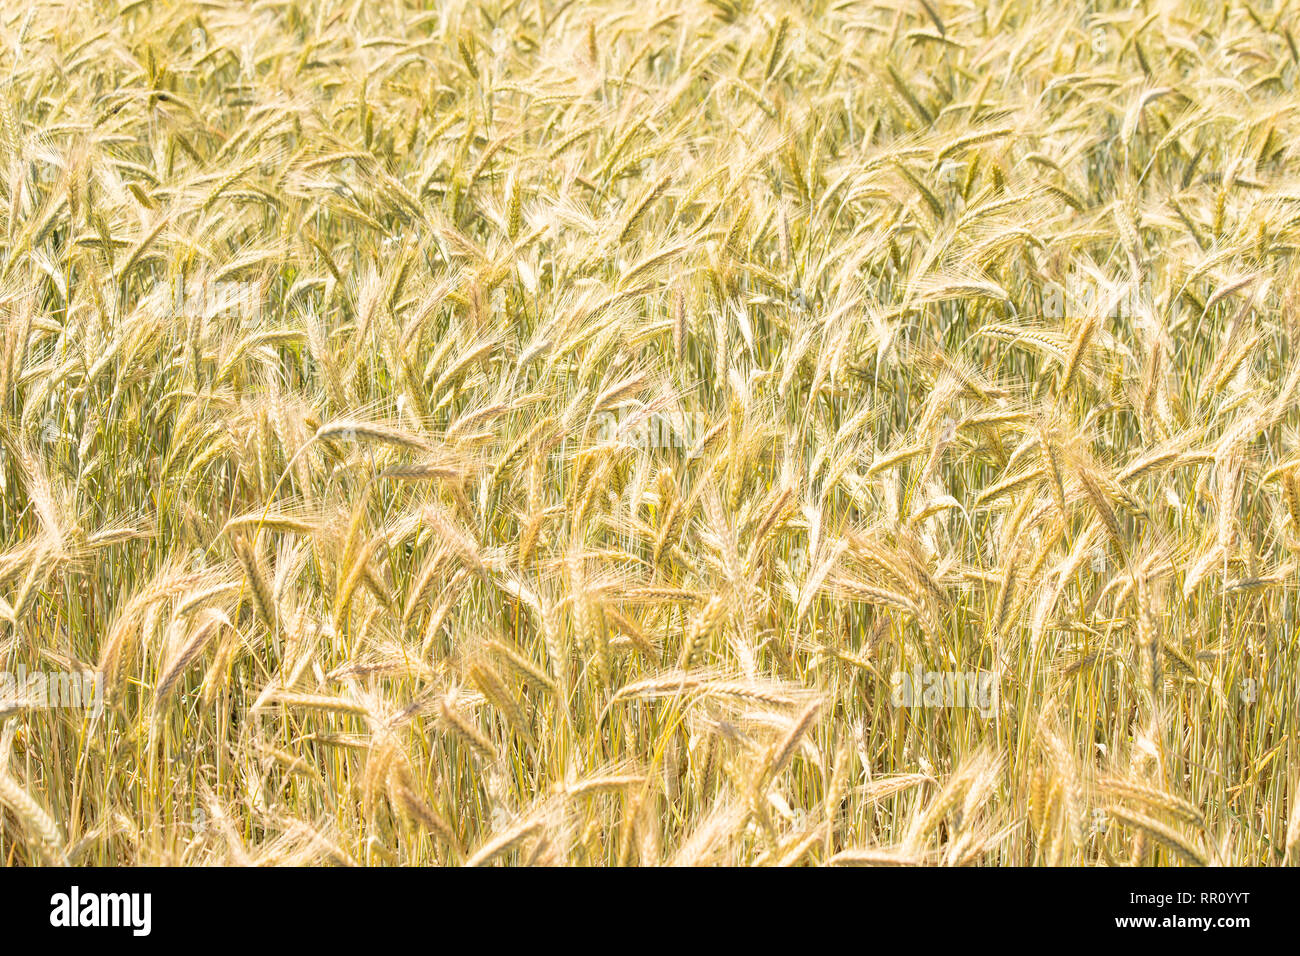 Wheat field close up Stock Photo